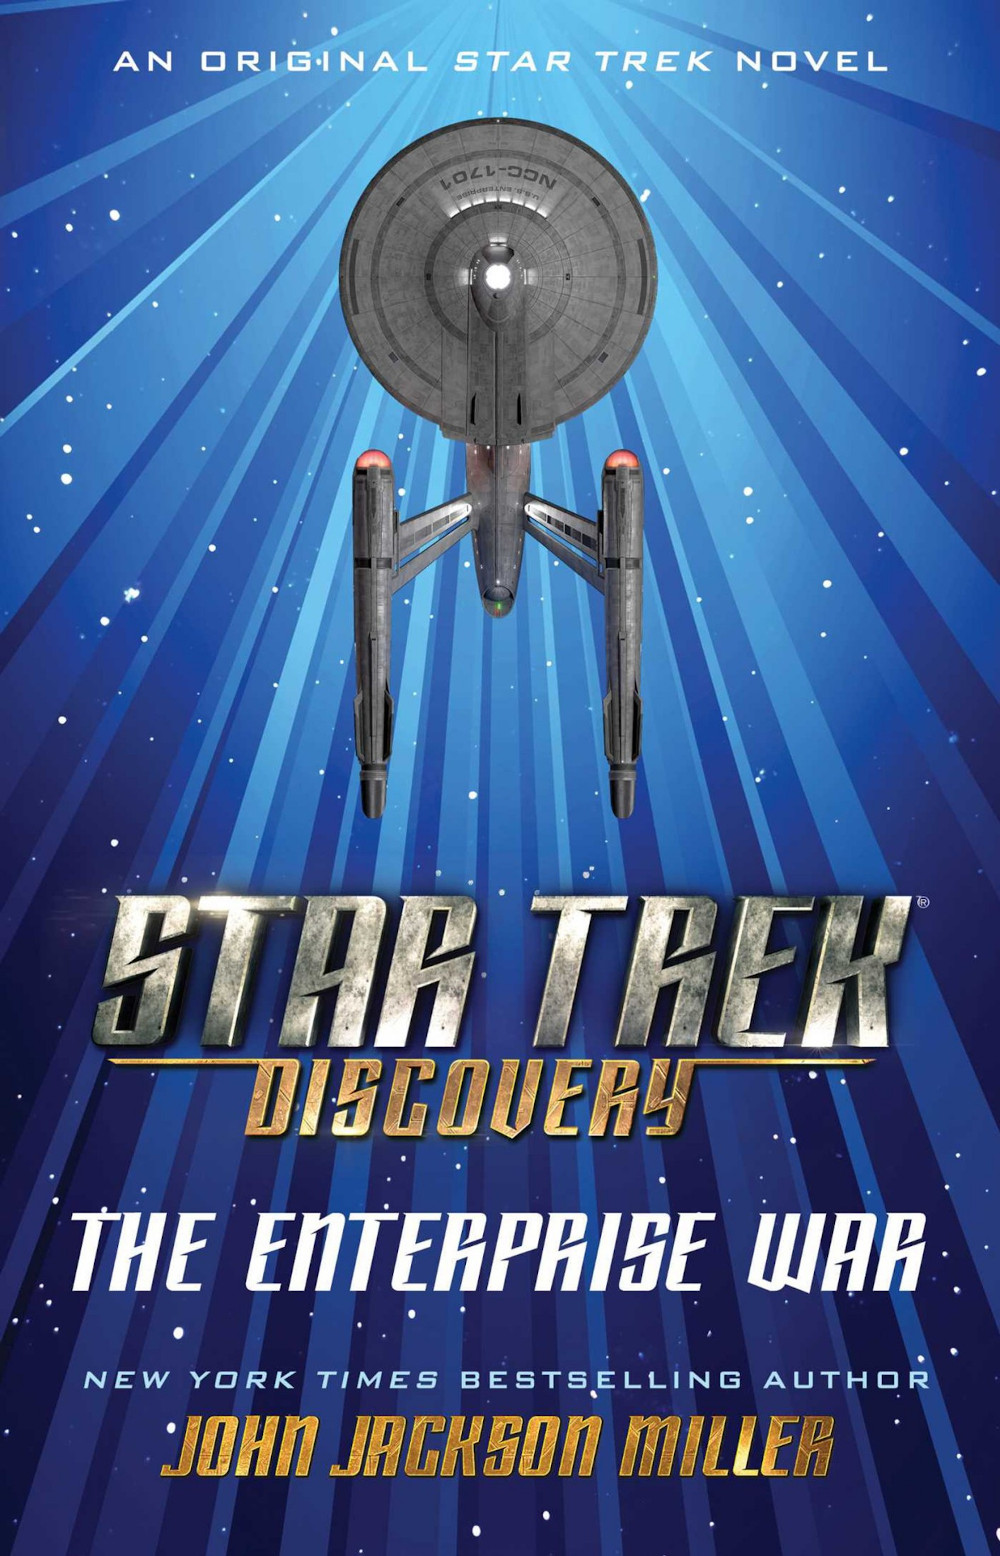 DSC: The Enterprise War